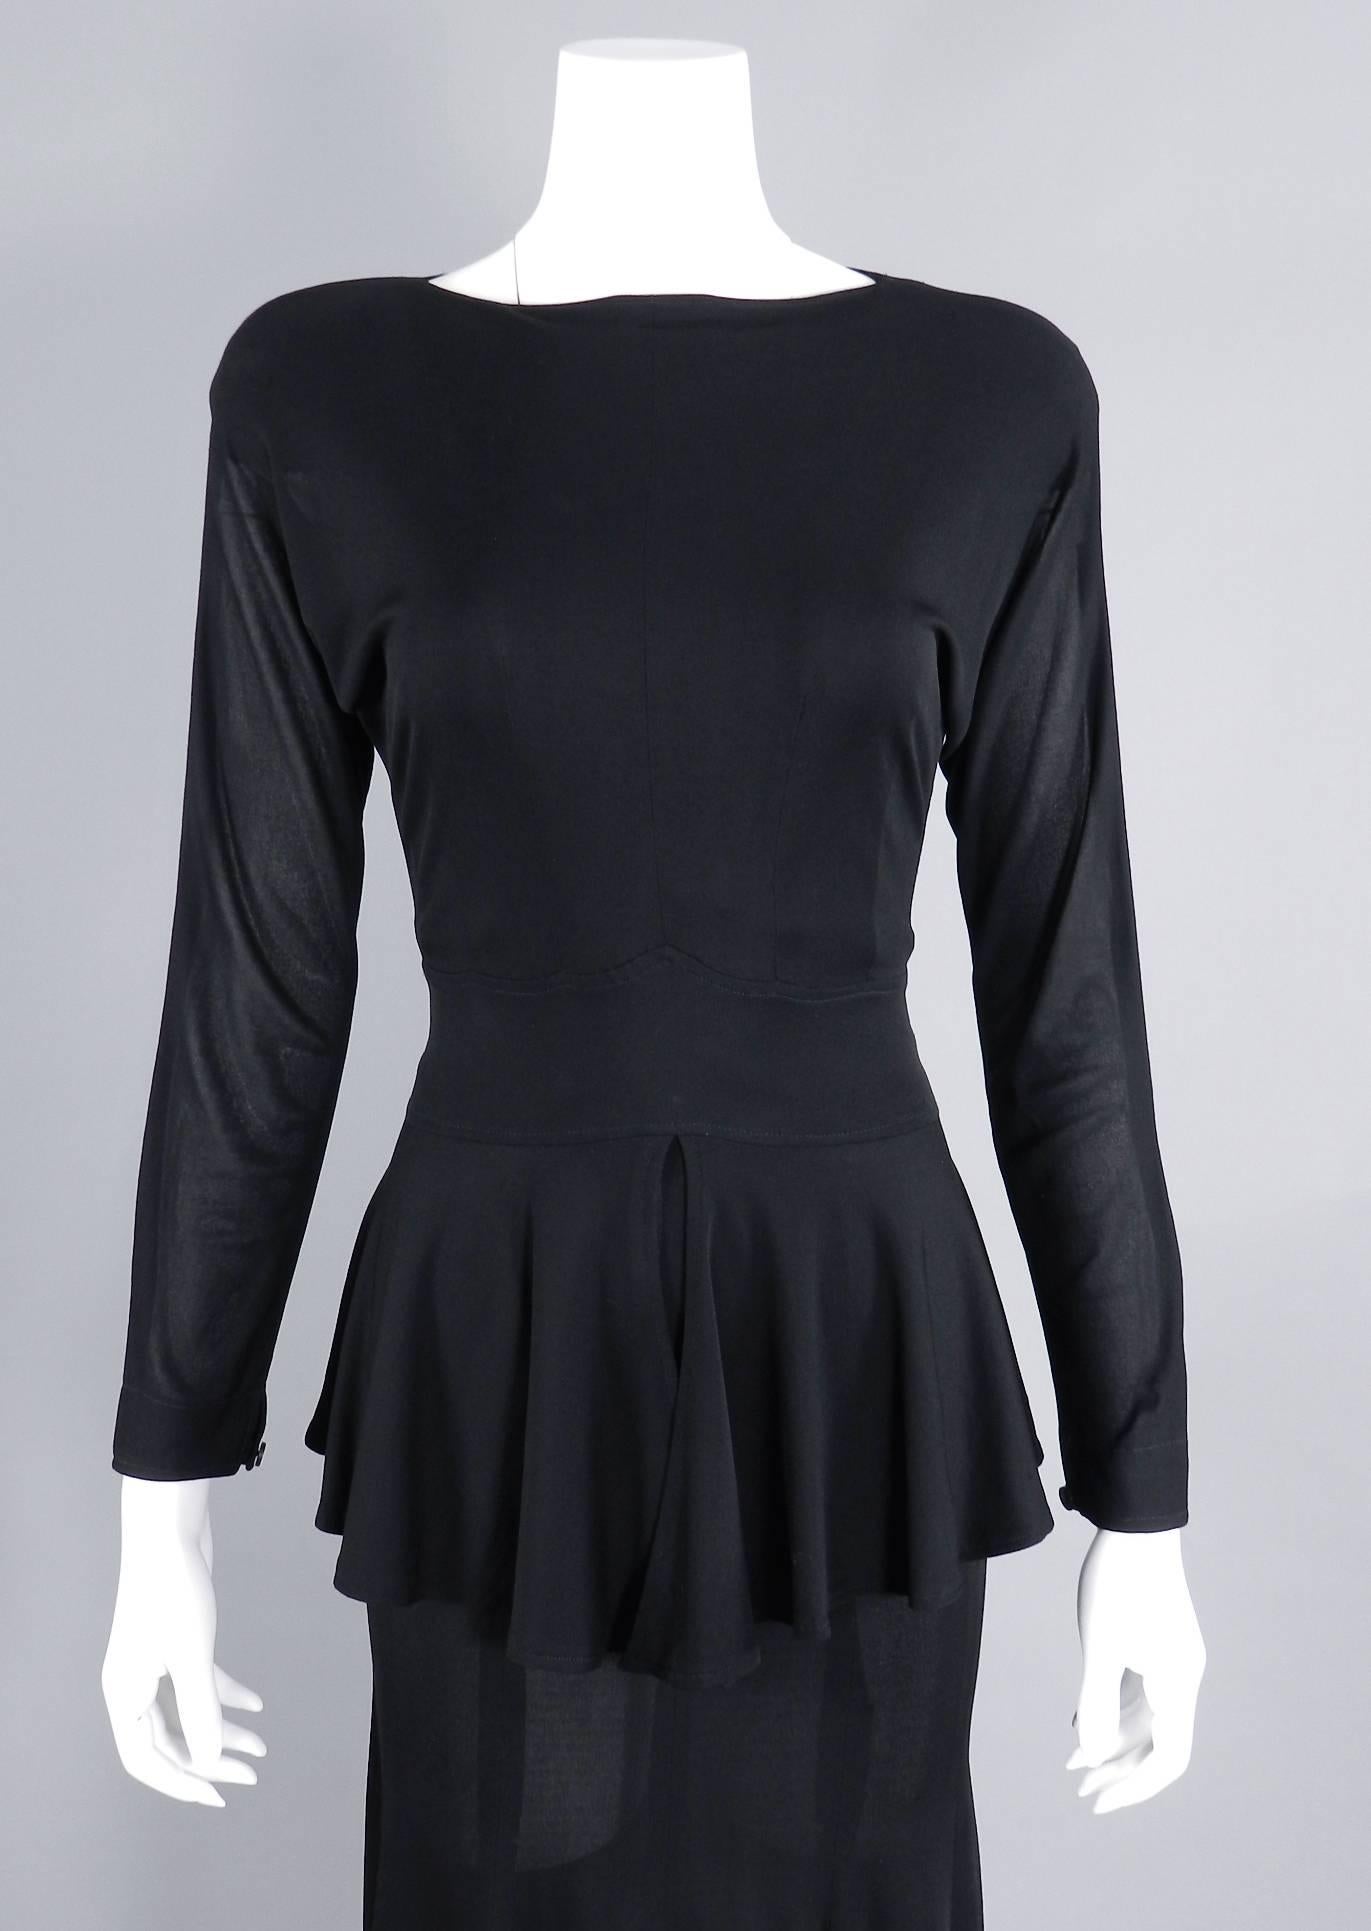 Women's Jean Muir Vintage 1980's Black Jersey Peplum Dress